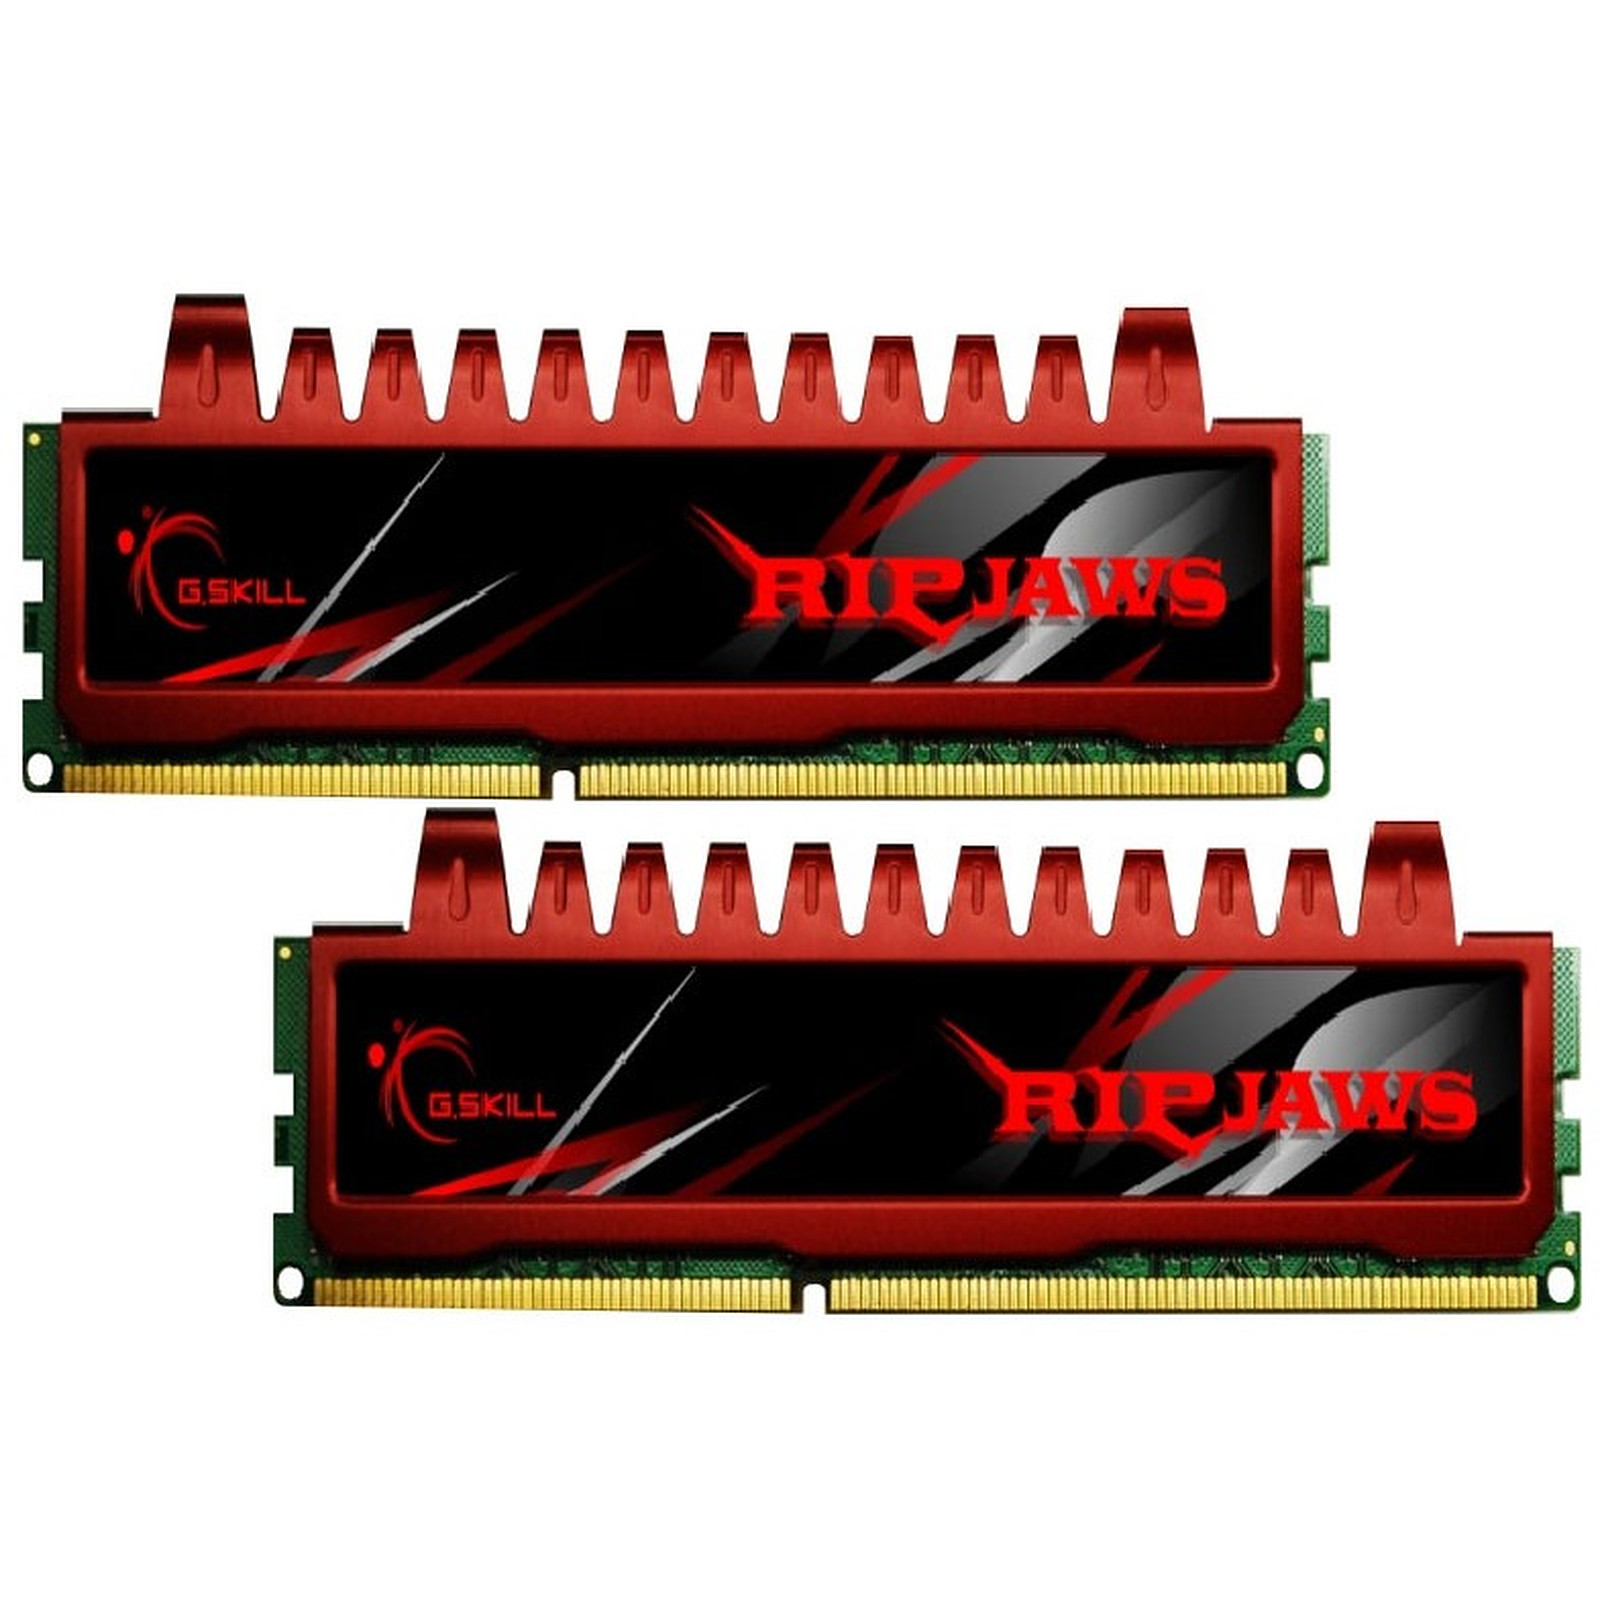 G.Skill RL Series RipJaws 8 Go (2x 4Go) DDR3 1066 MHz - Memoire PC G.Skill